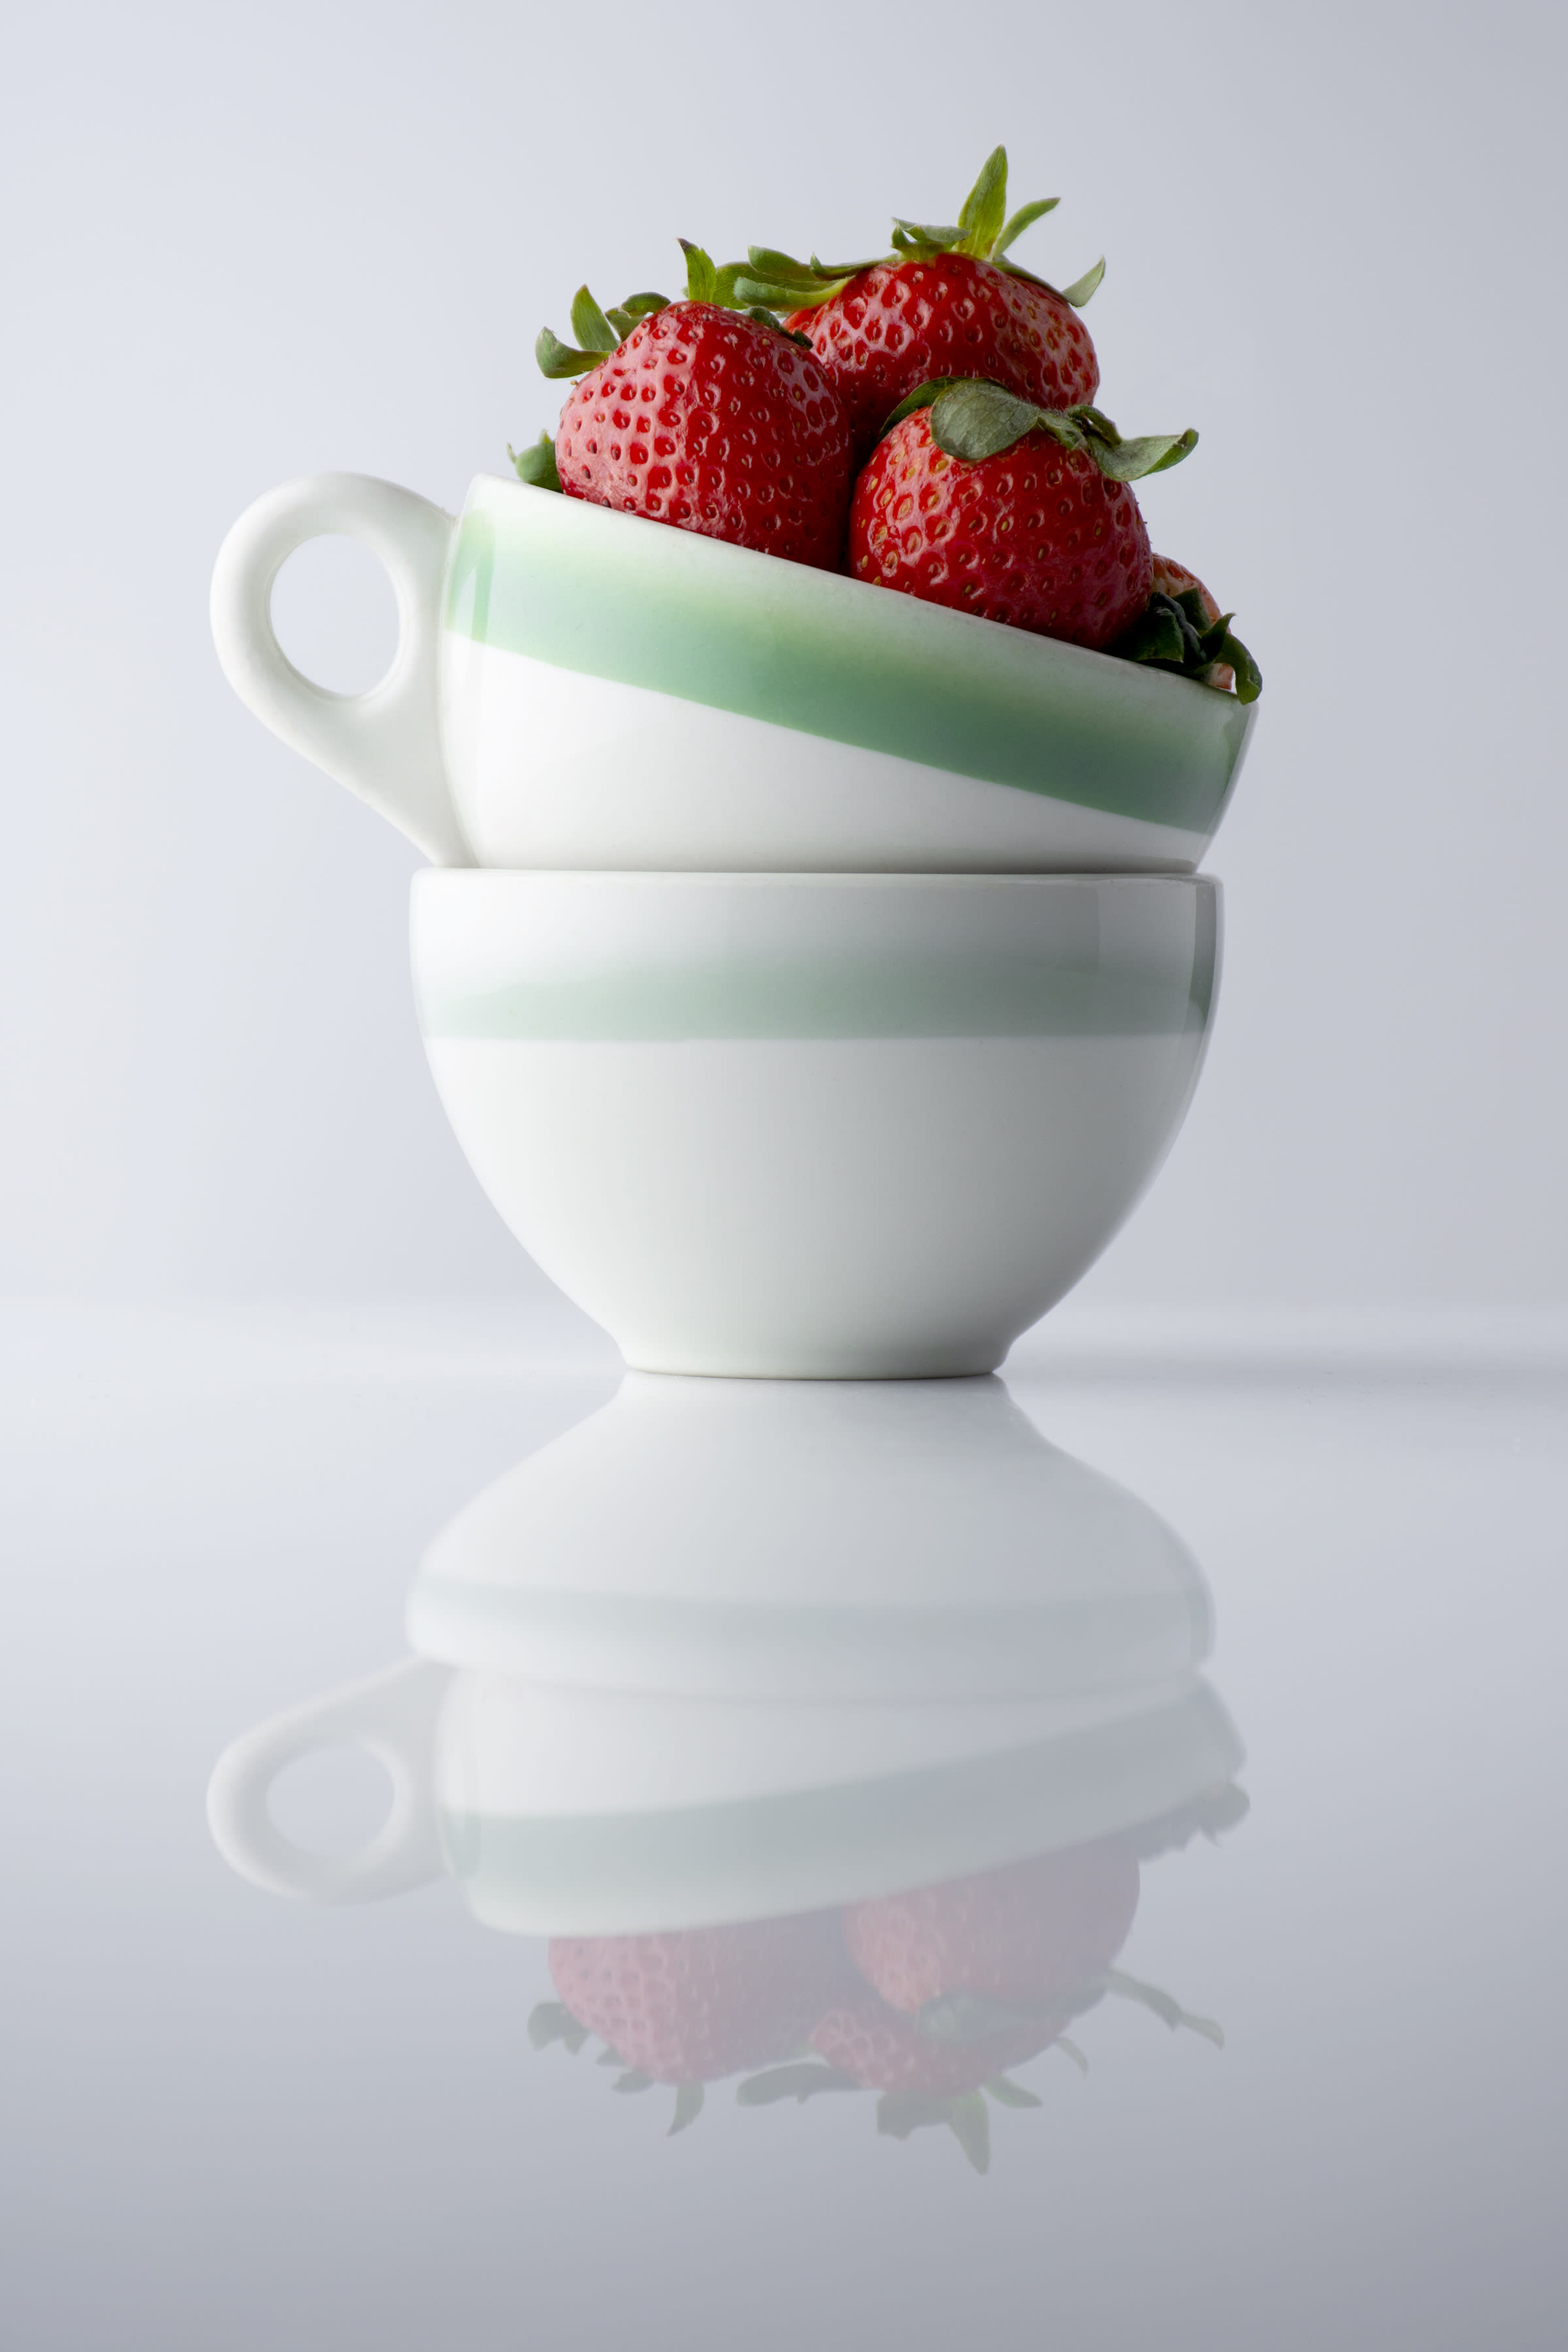 berries in a tea cup - award winning photo